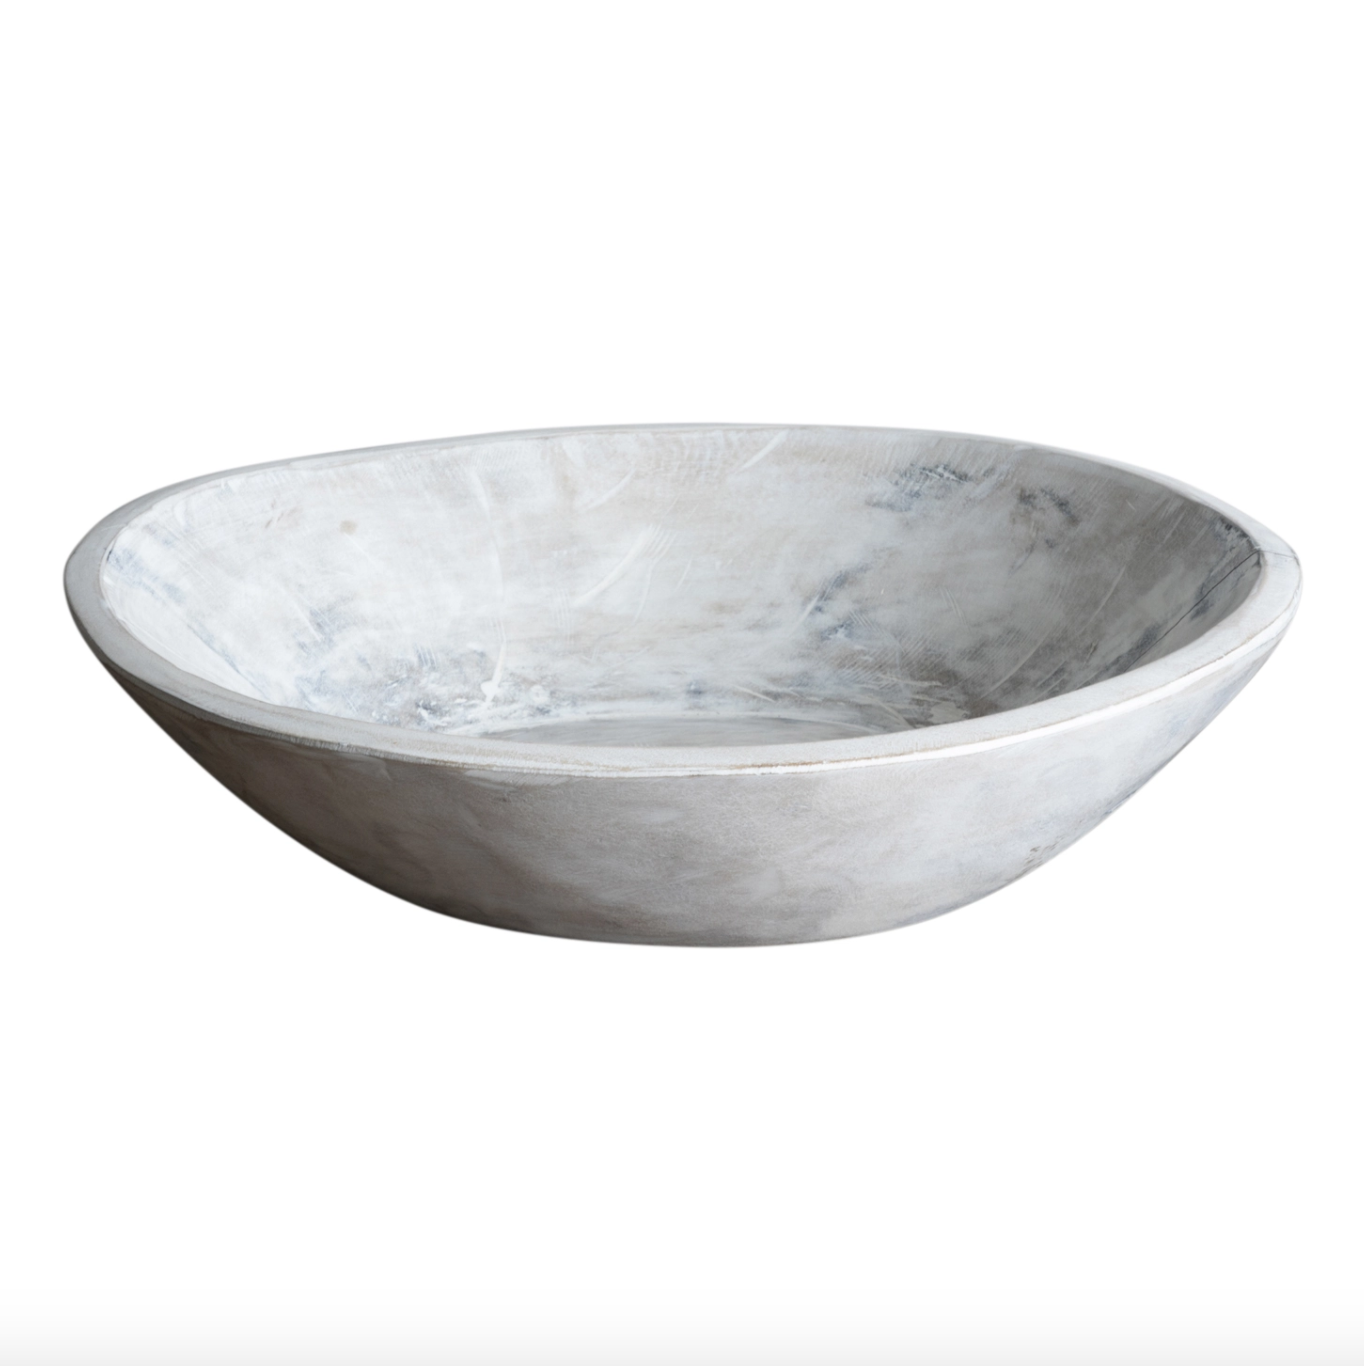 Found Dough Bowl White Wash Medium